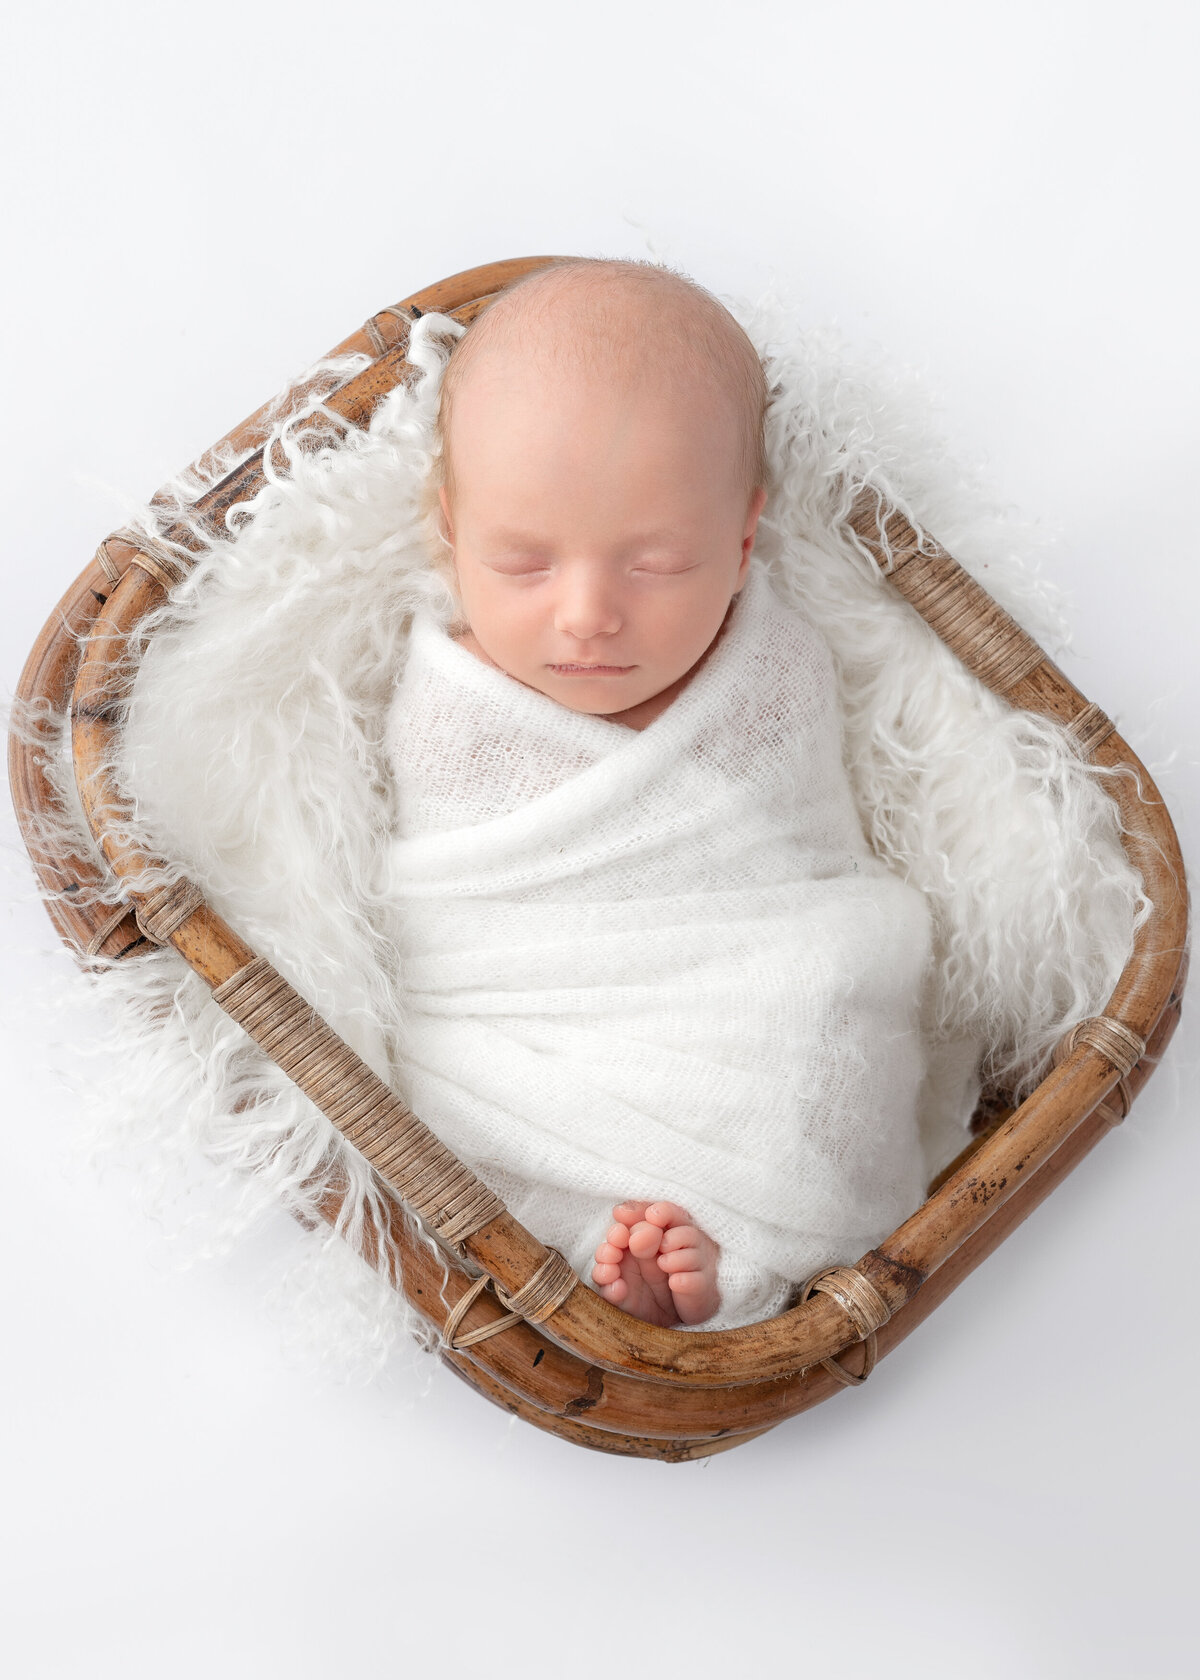 Hobart Newborn Photographer | Lauren Vanier Photography_-19